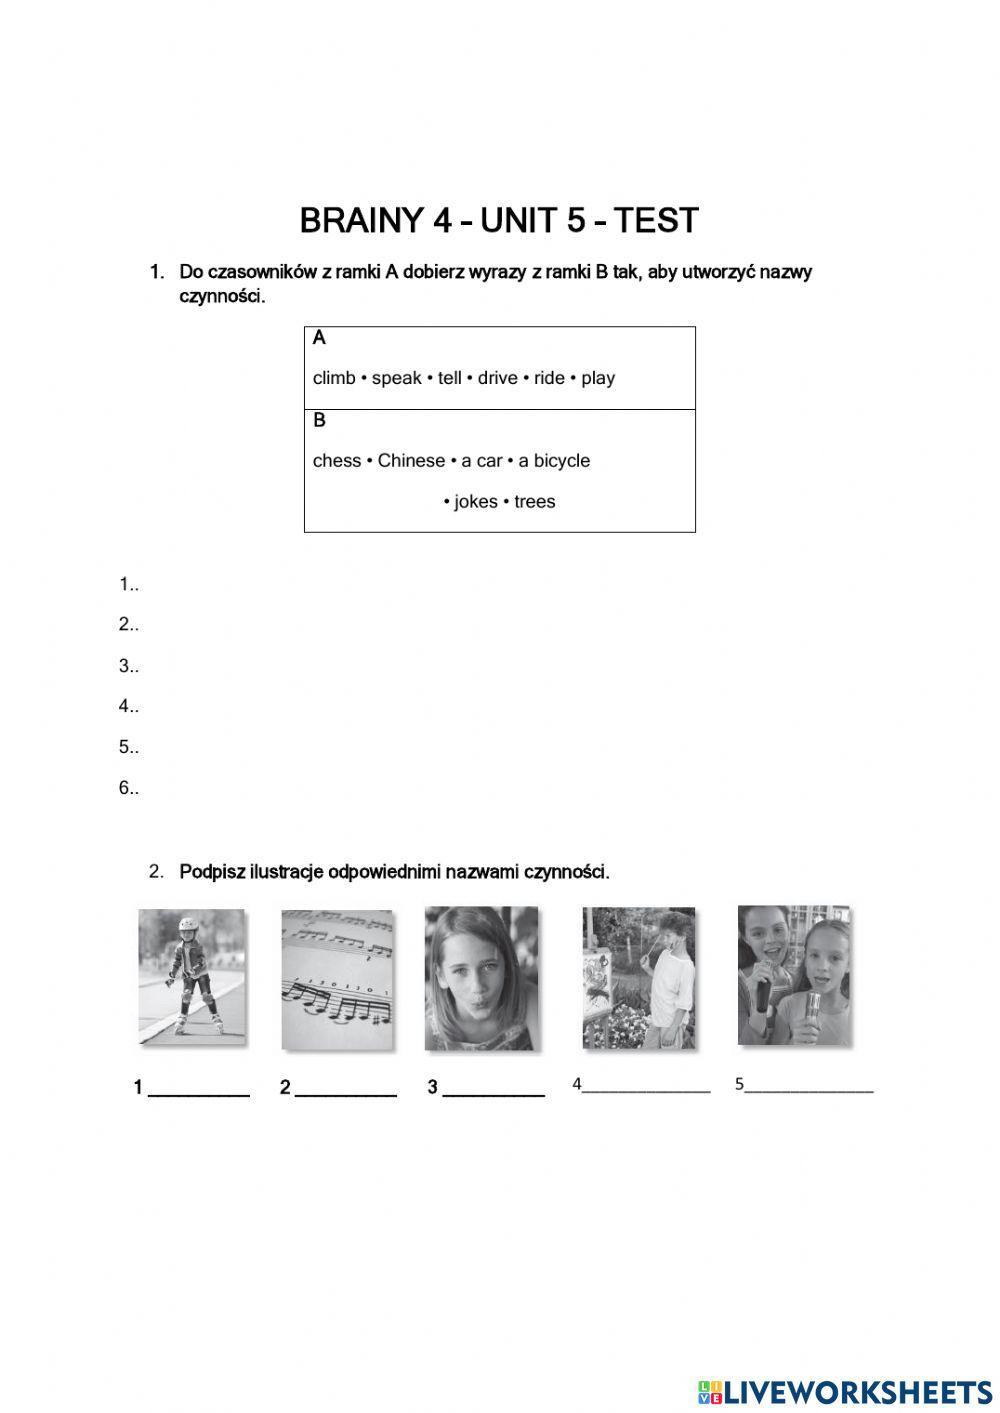 Brainy 4 unit 5 test